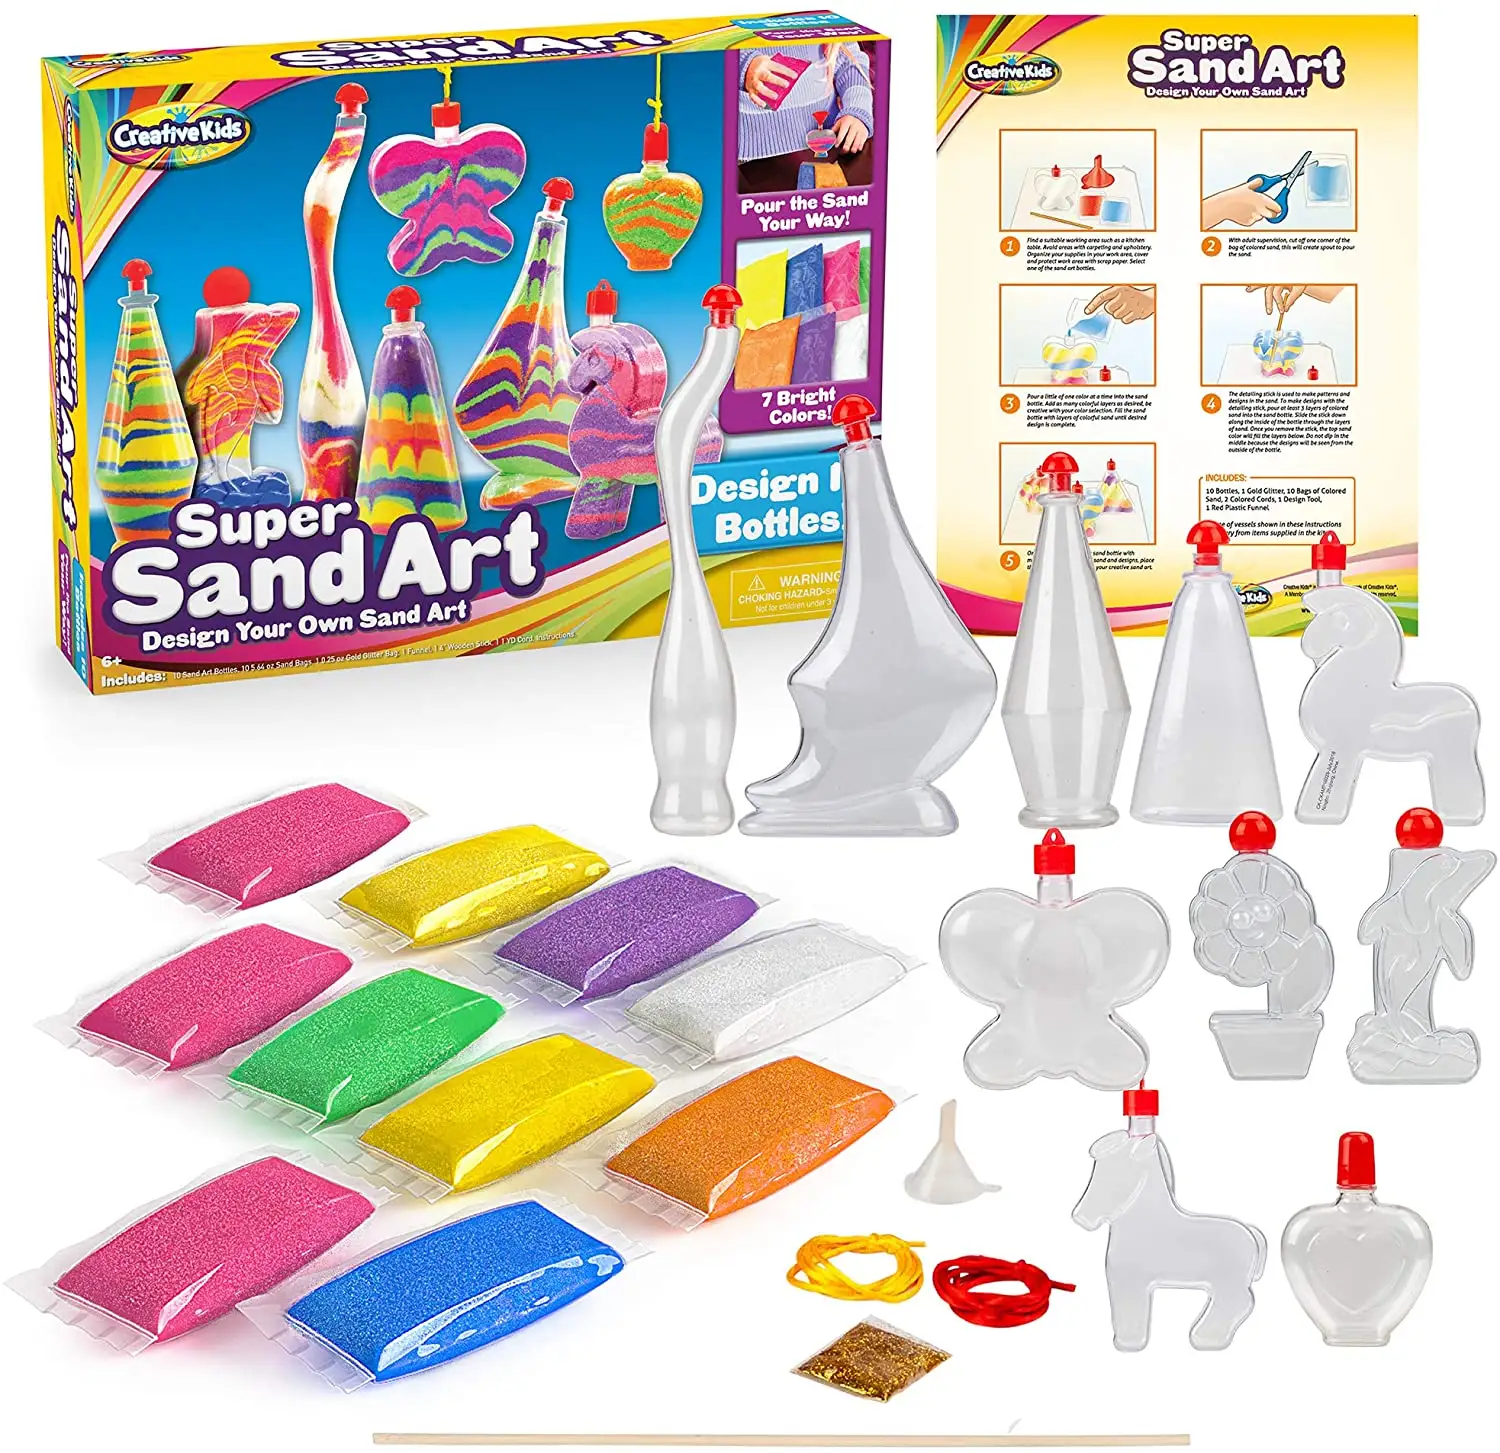 Perfect Kraft Create Your Own Sand Art DIY Kit Includes 4 Sand Bottles & 2 PendentとBottles 8 Bright Sand Colors、Designing